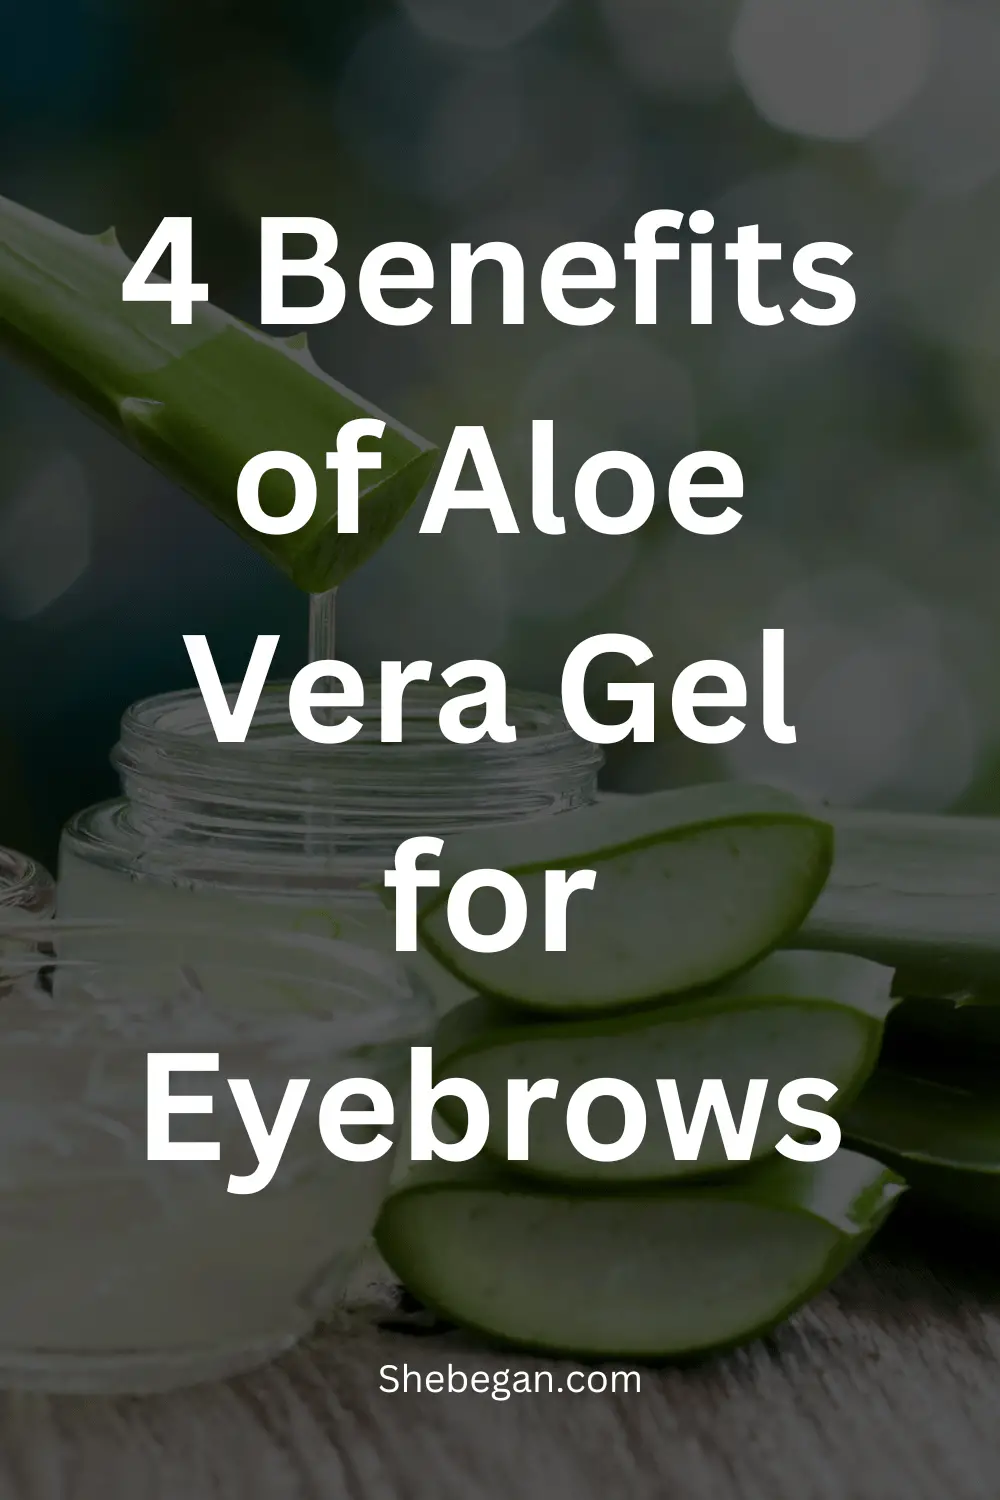 4 Benefits of Aloe Vera Gel for Eyebrows